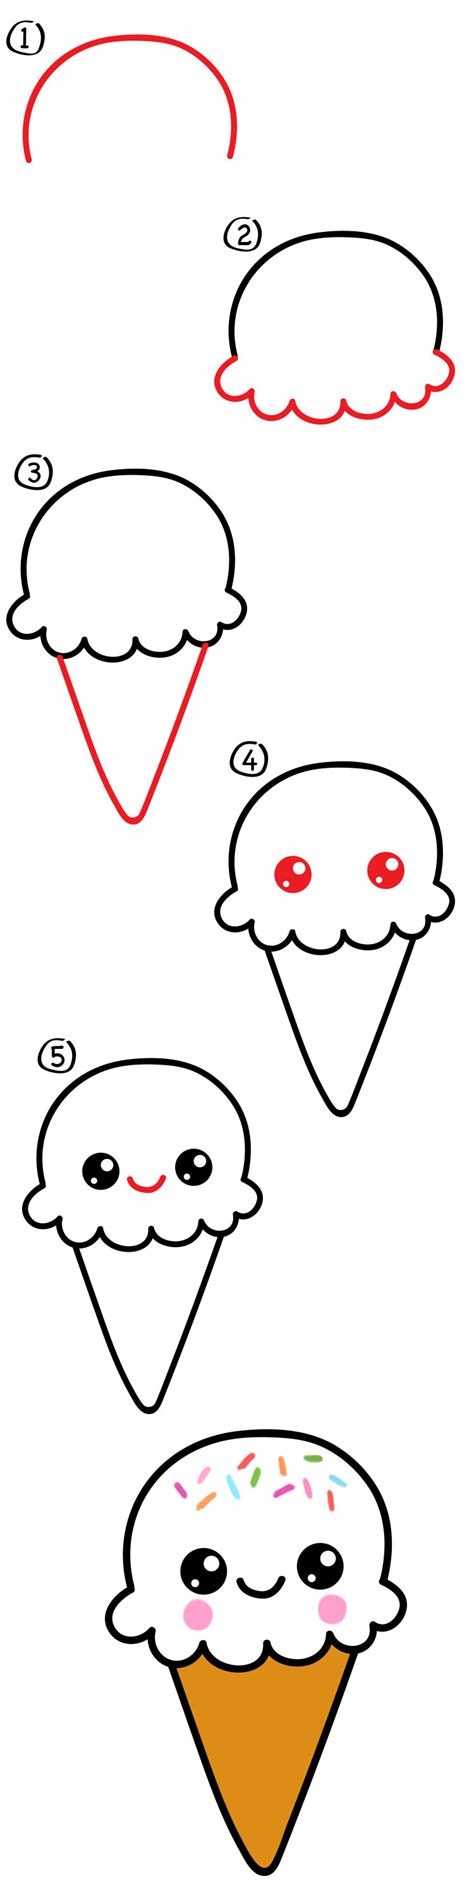 How To Draw Cute Ice Cream Cone Cartoon Ice Cream Cone Step By Step